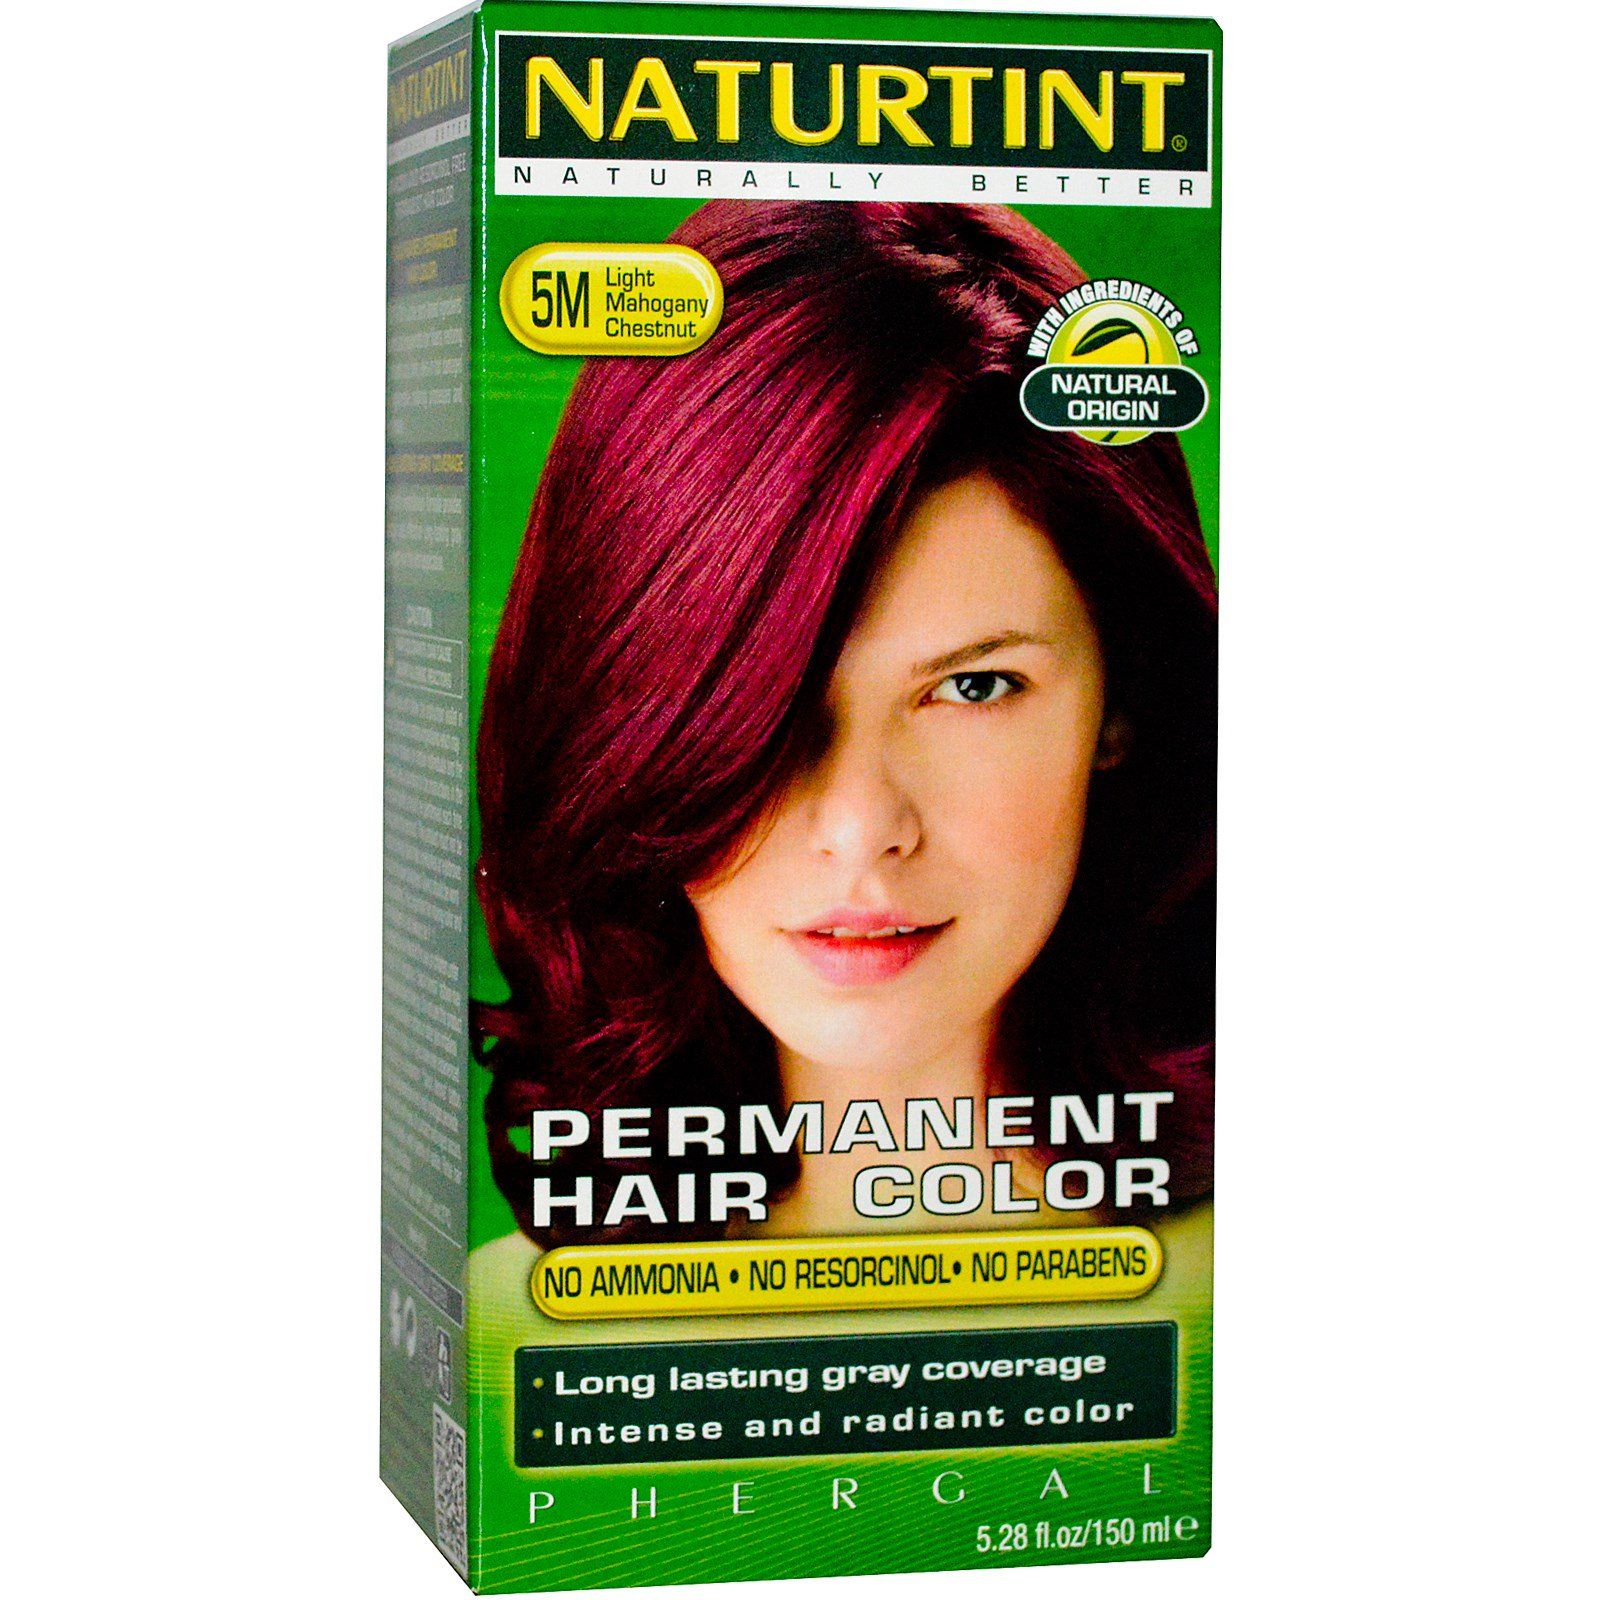 Naturtint Стойкая краска для волос 5M светлый махагони-каштан 5,28 жидких унций (150 мл) naturtint стойкая краска для волос 4n натуральный каштан 165 мл 5 6 жидк унций